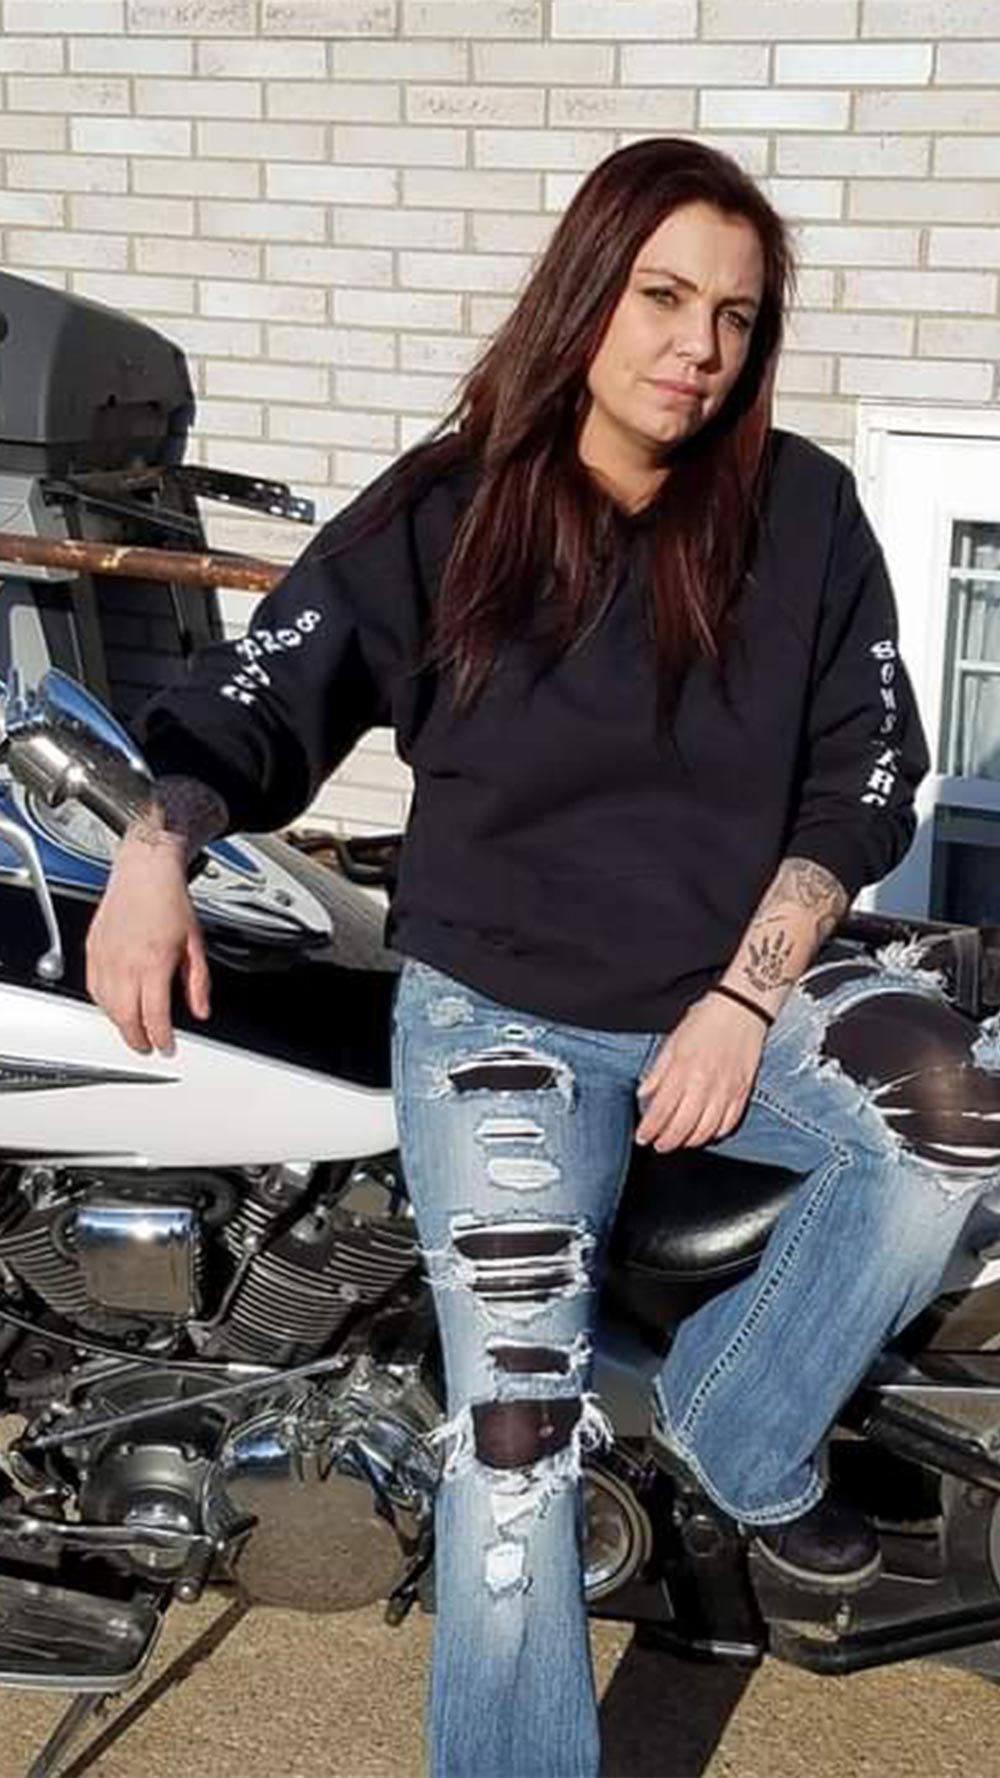 Shannen Davis sitting on a motorcycle.